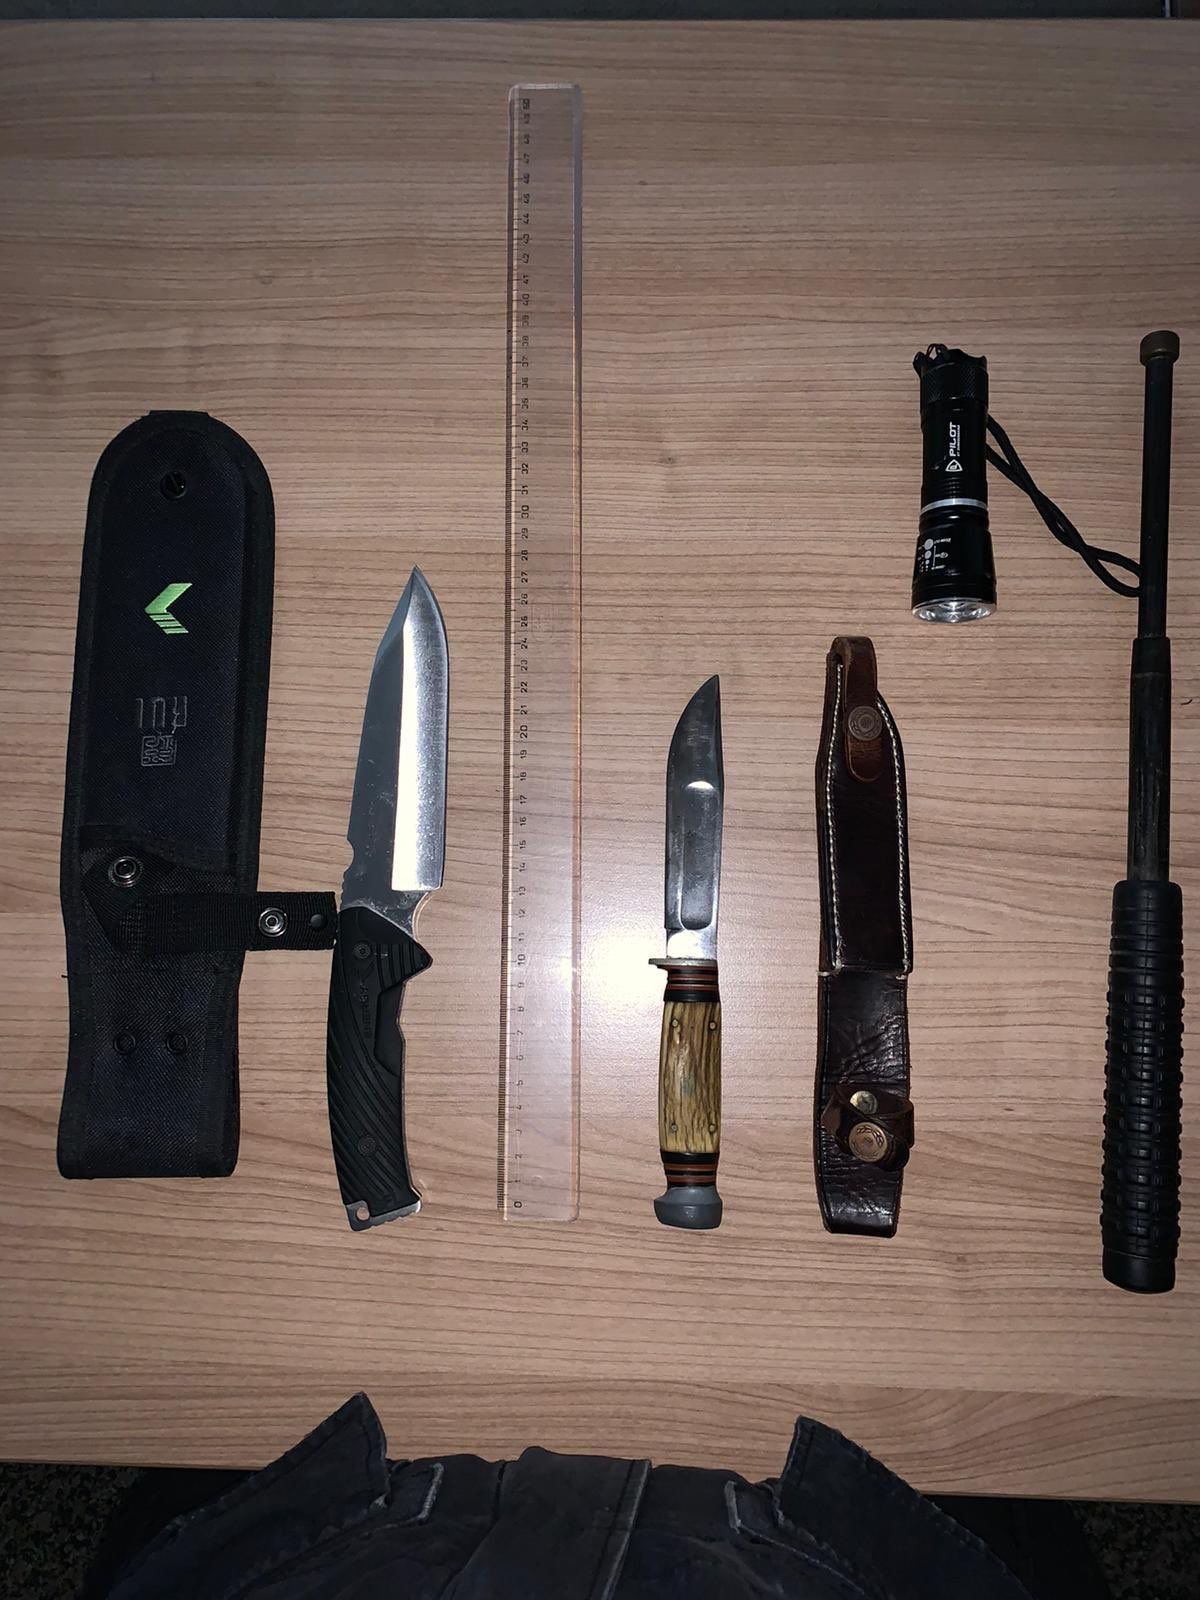 nůž zabavila policie